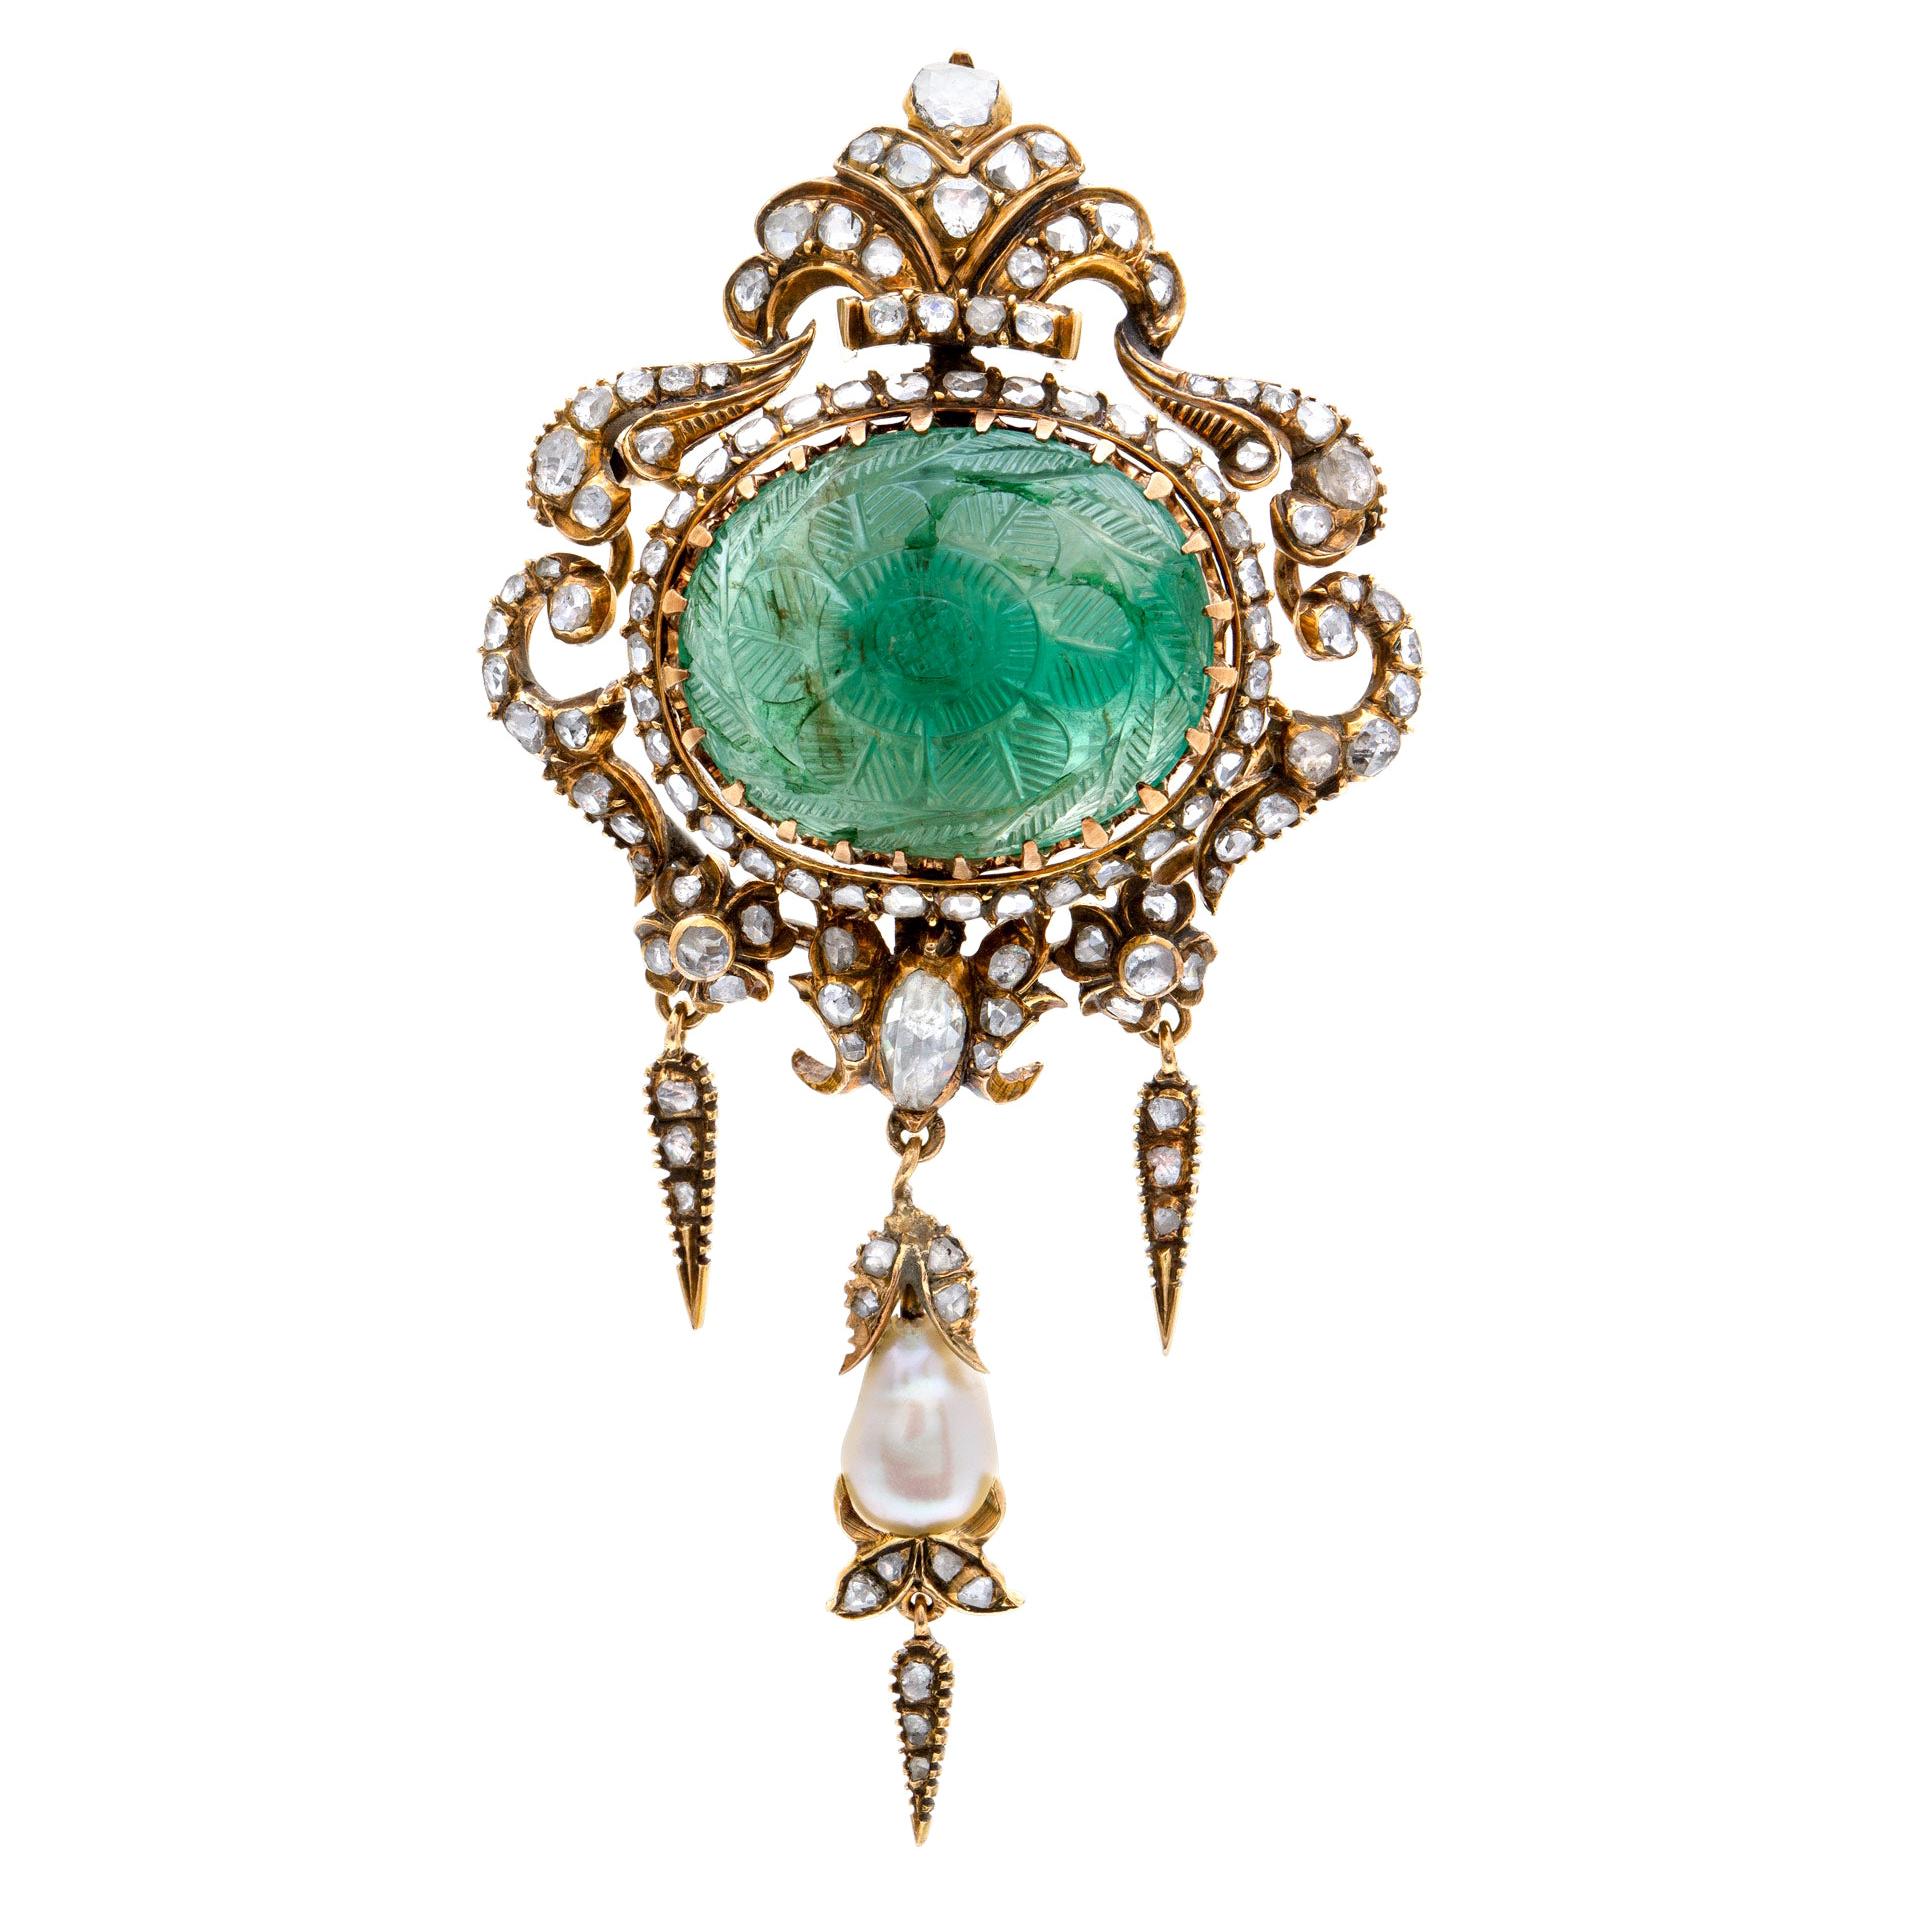 Antique Broach/Pendant with Emerald Cabochon, Rose Cut & Cushion Cut Diamonds